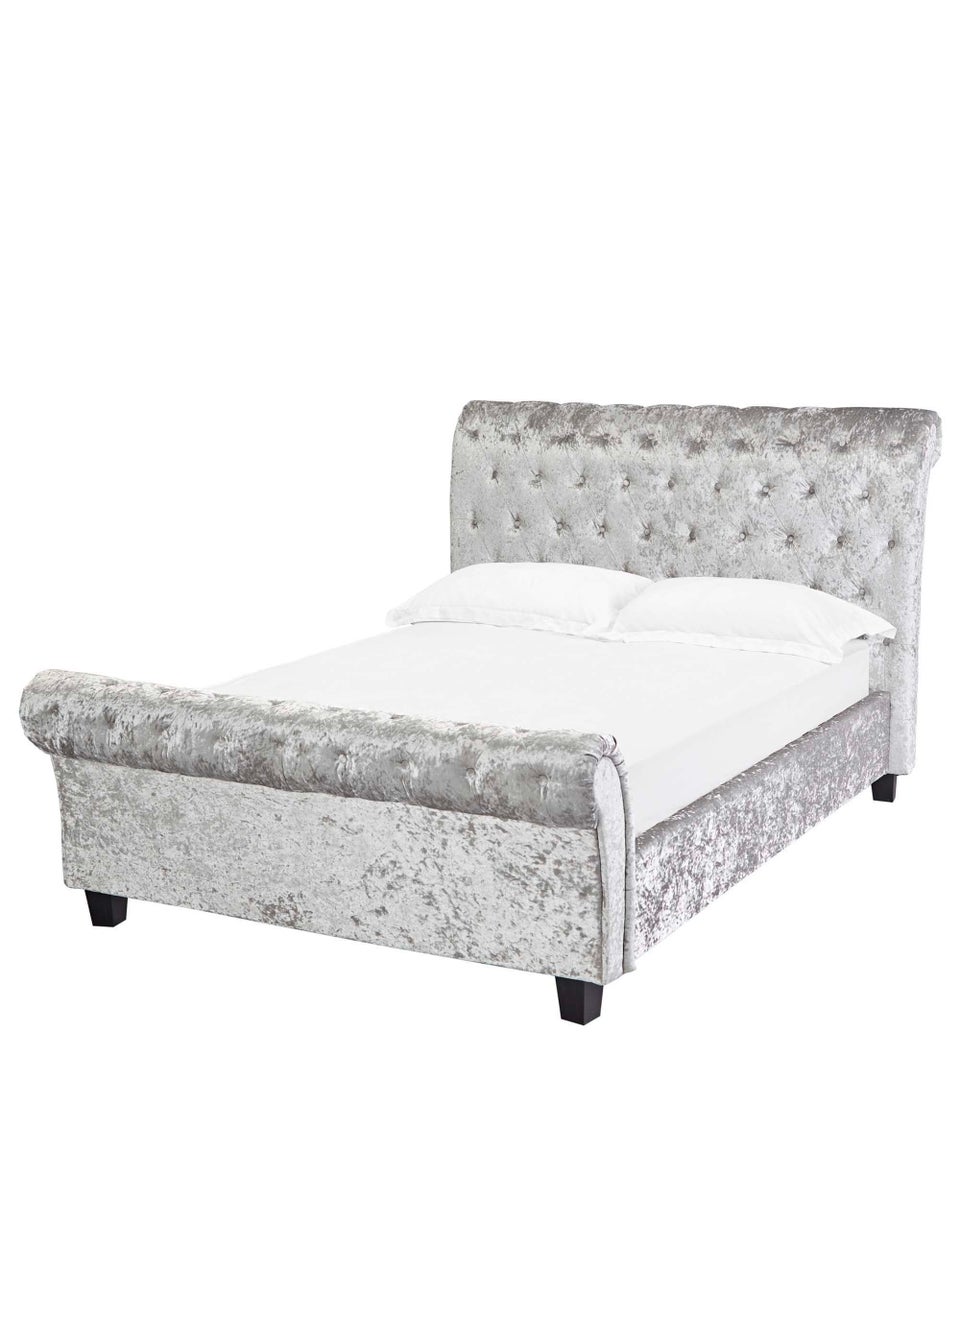 LPD Furniture Isabella Bed